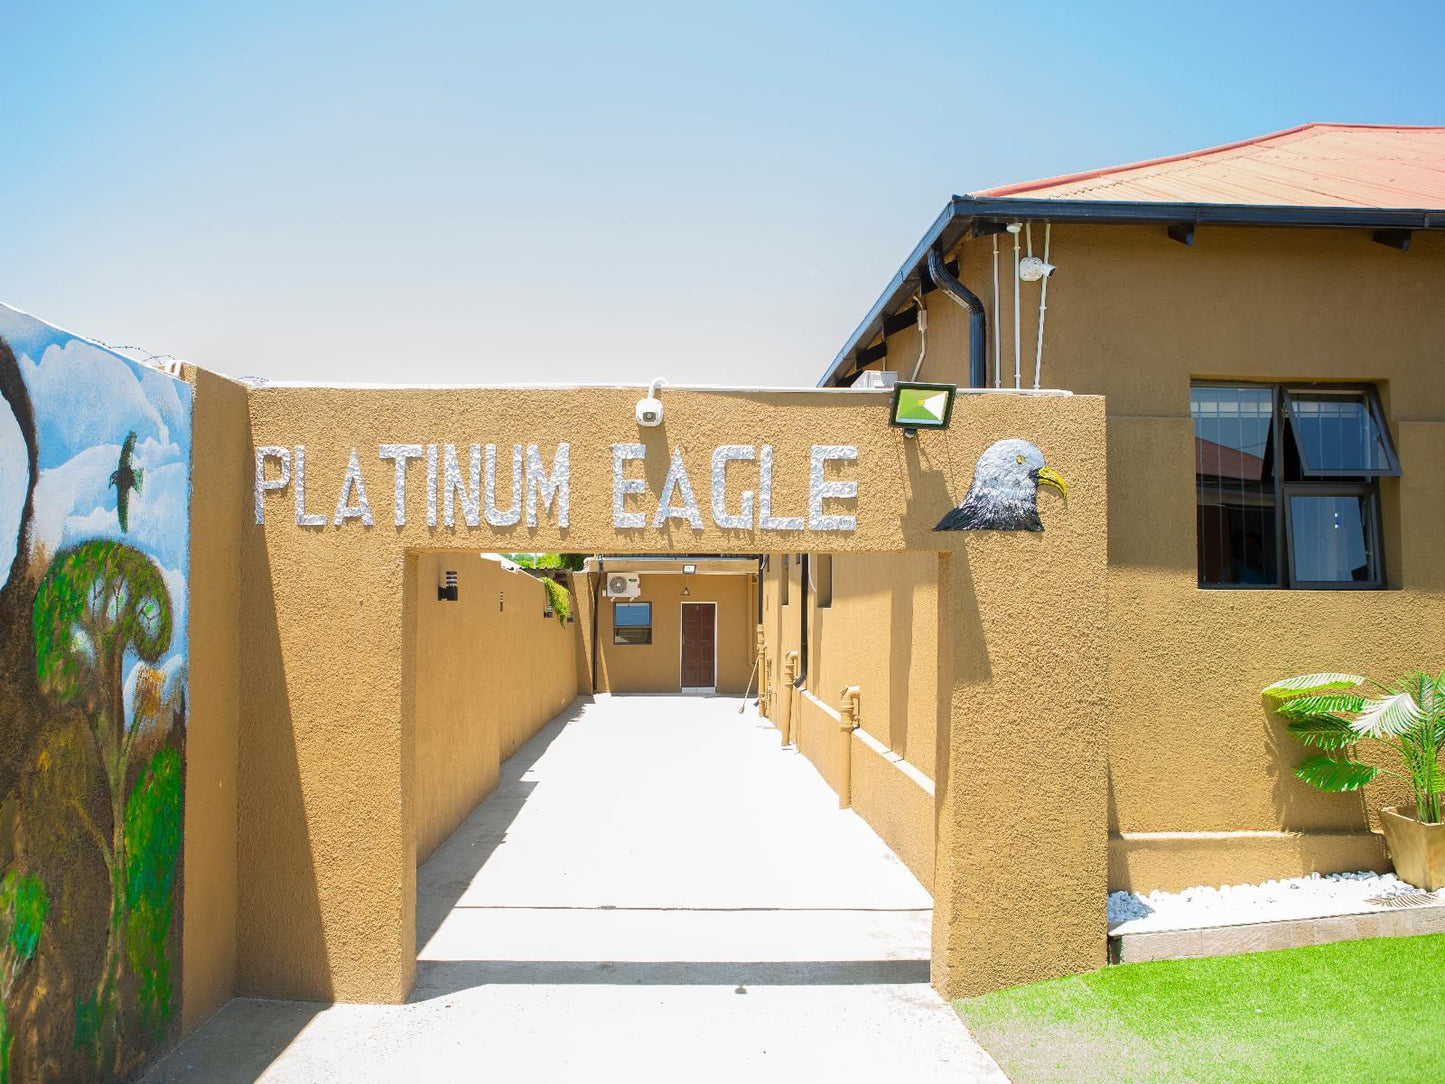 Platinum Eagle Guest House Rosettenville Johannesburg Gauteng South Africa Complementary Colors